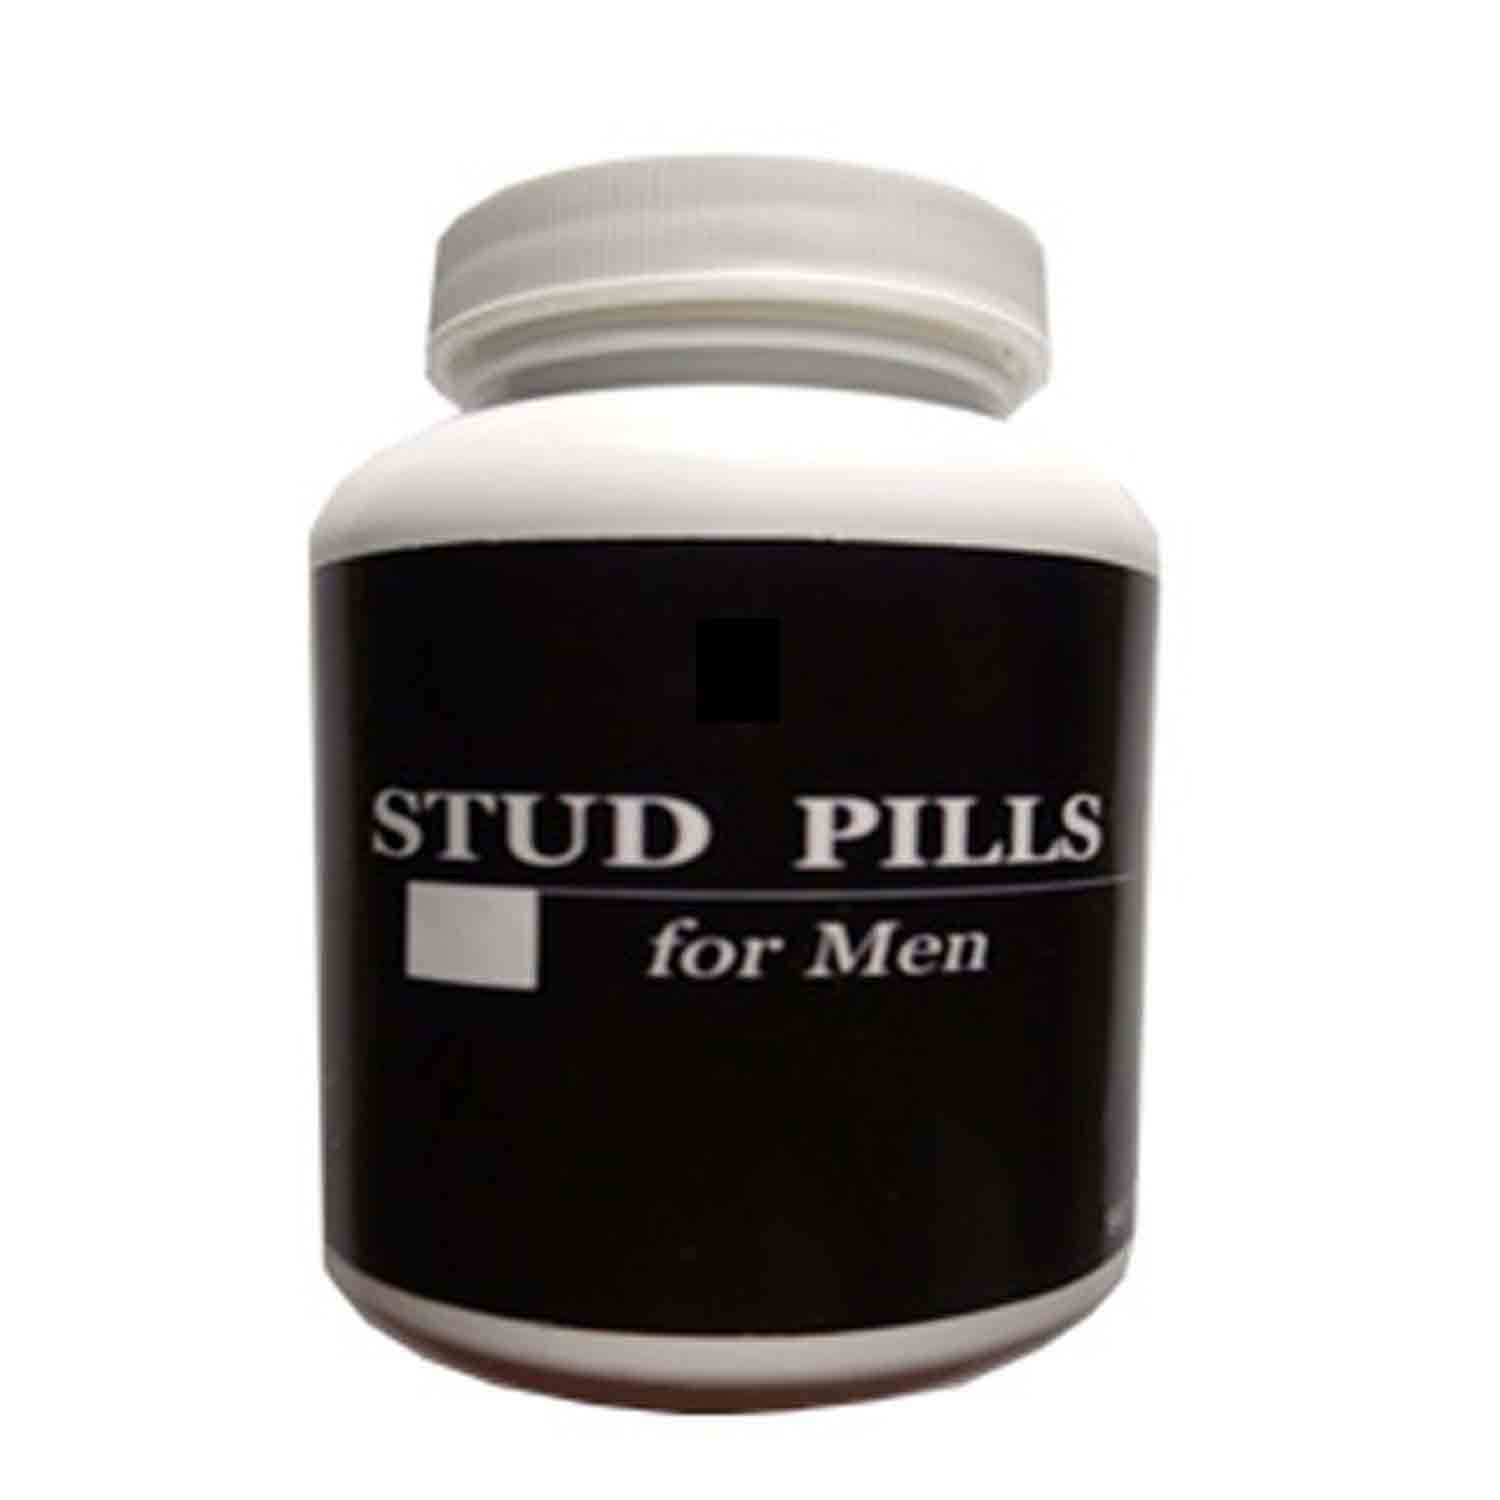  Stud Pills 